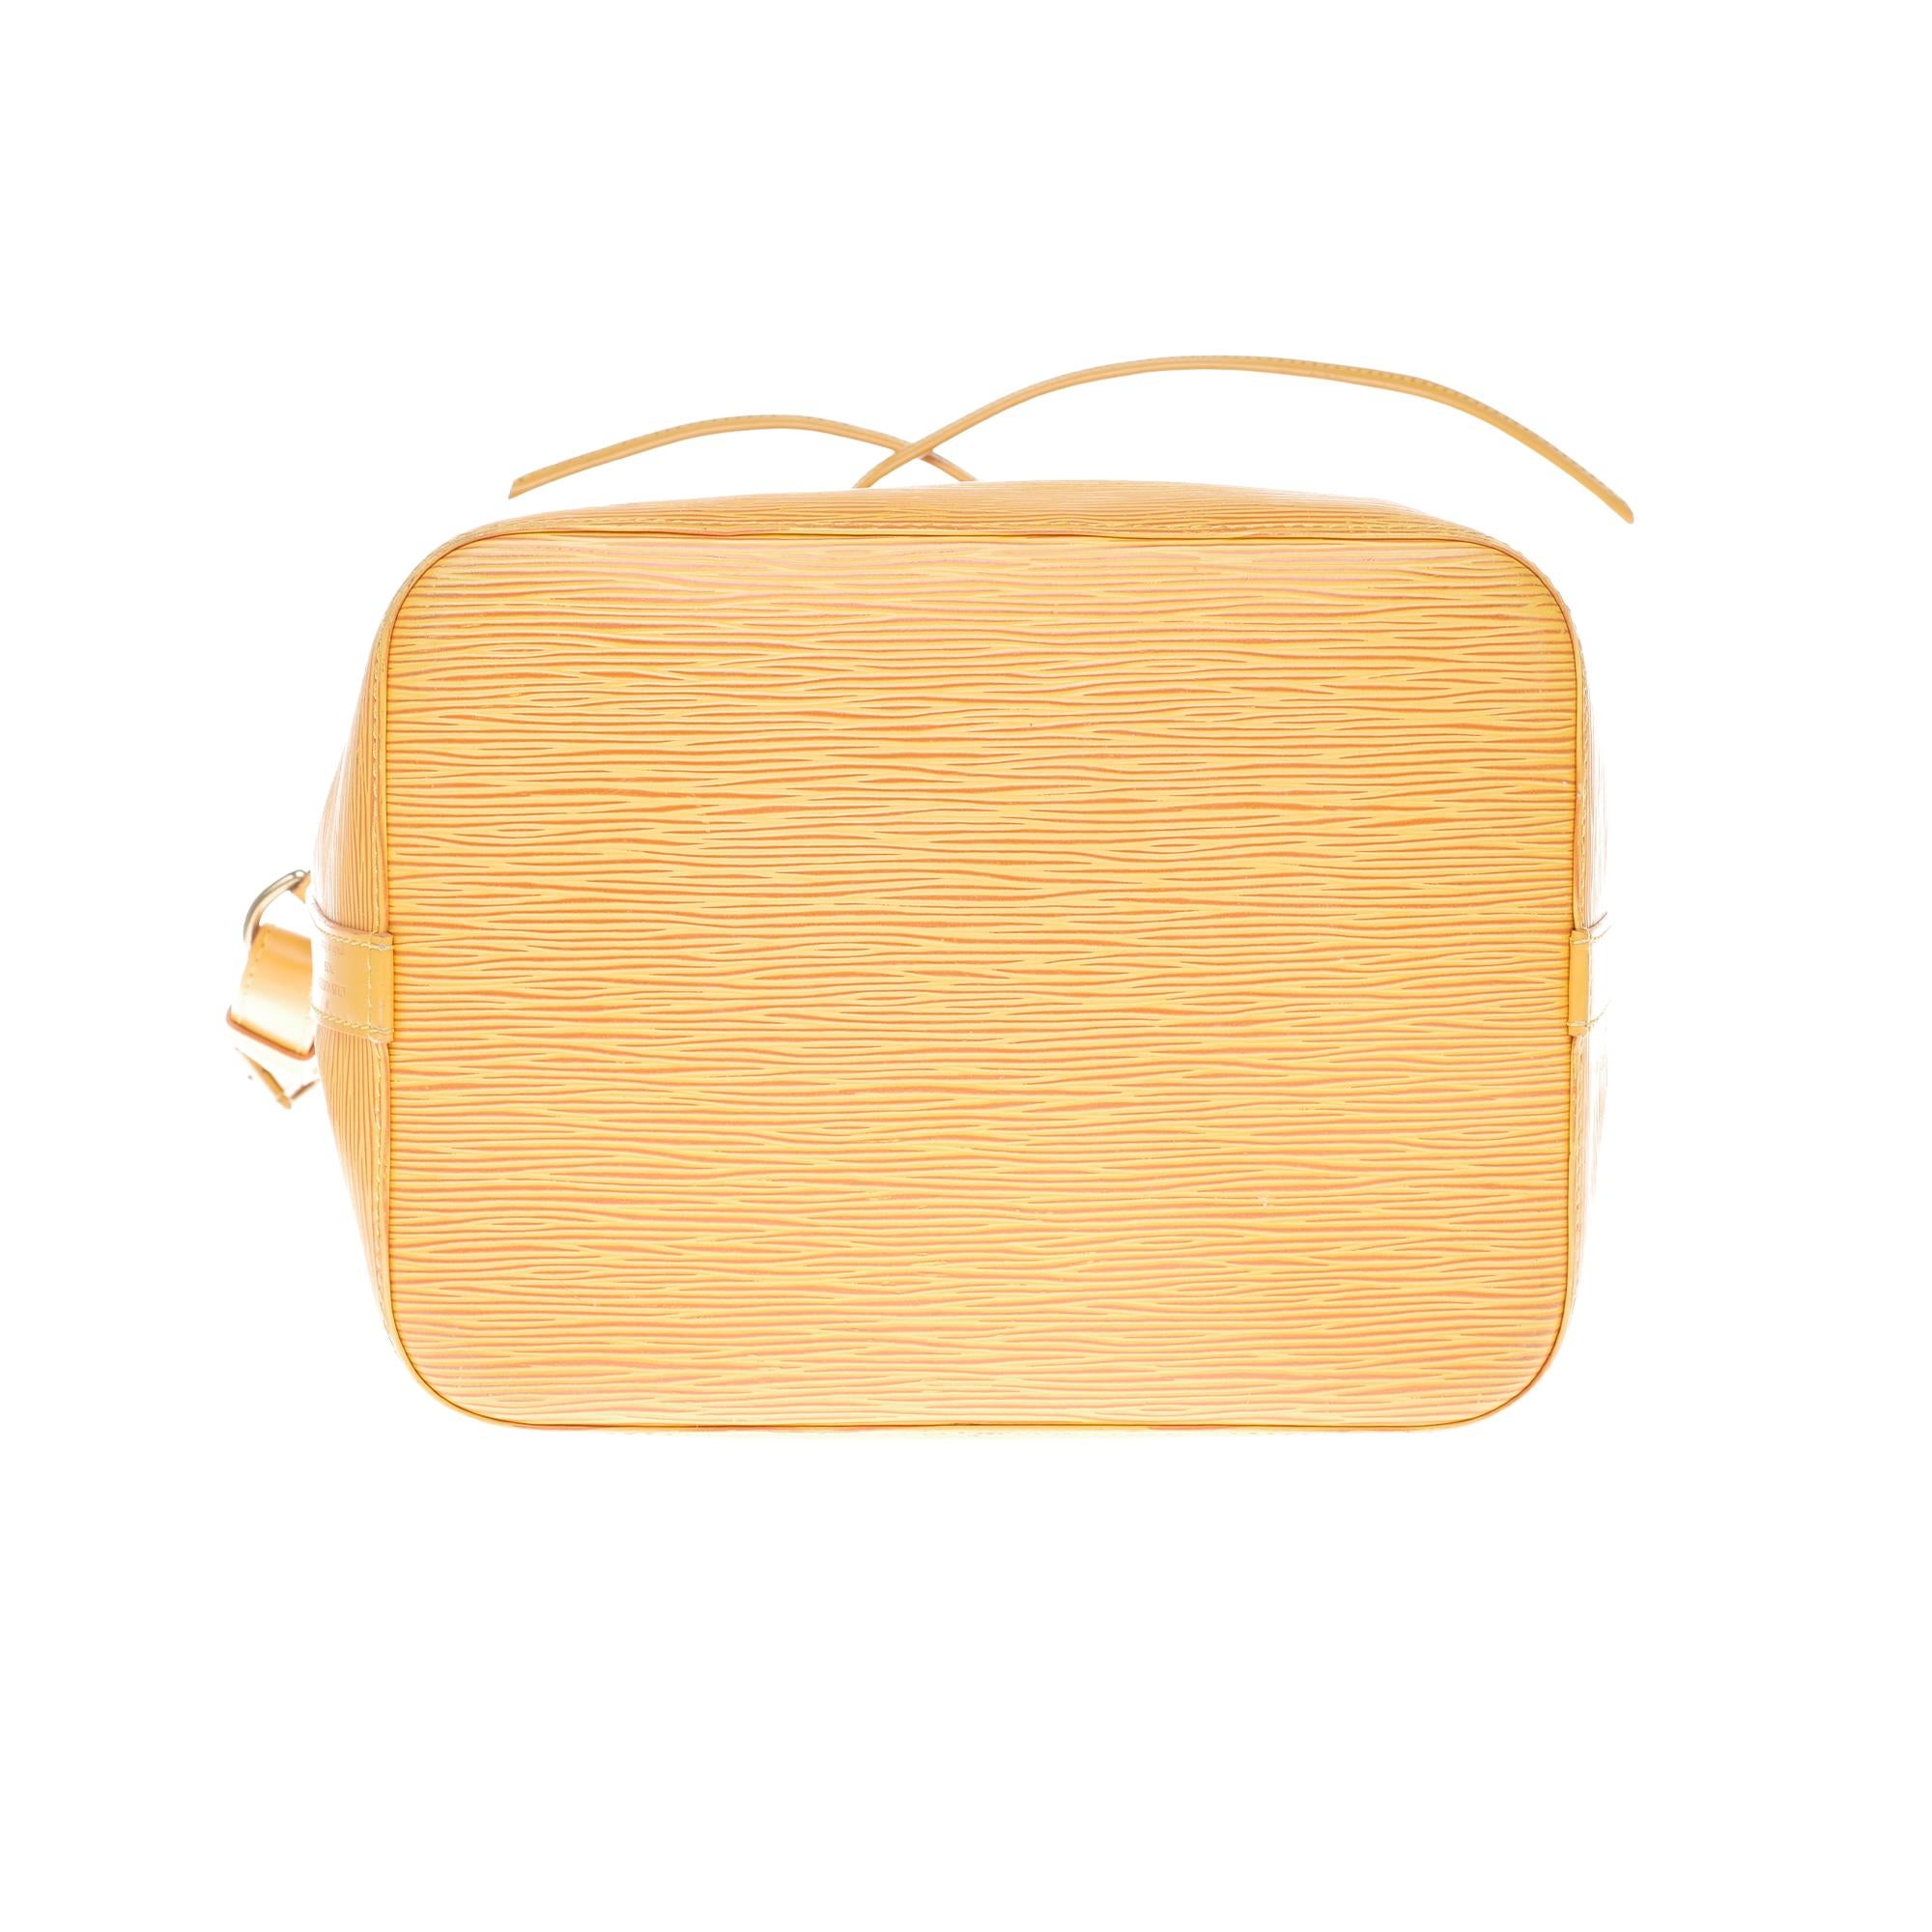 Louis Vuitton Noé PM shoulder bag in yellow epi leather, gold hardware 4